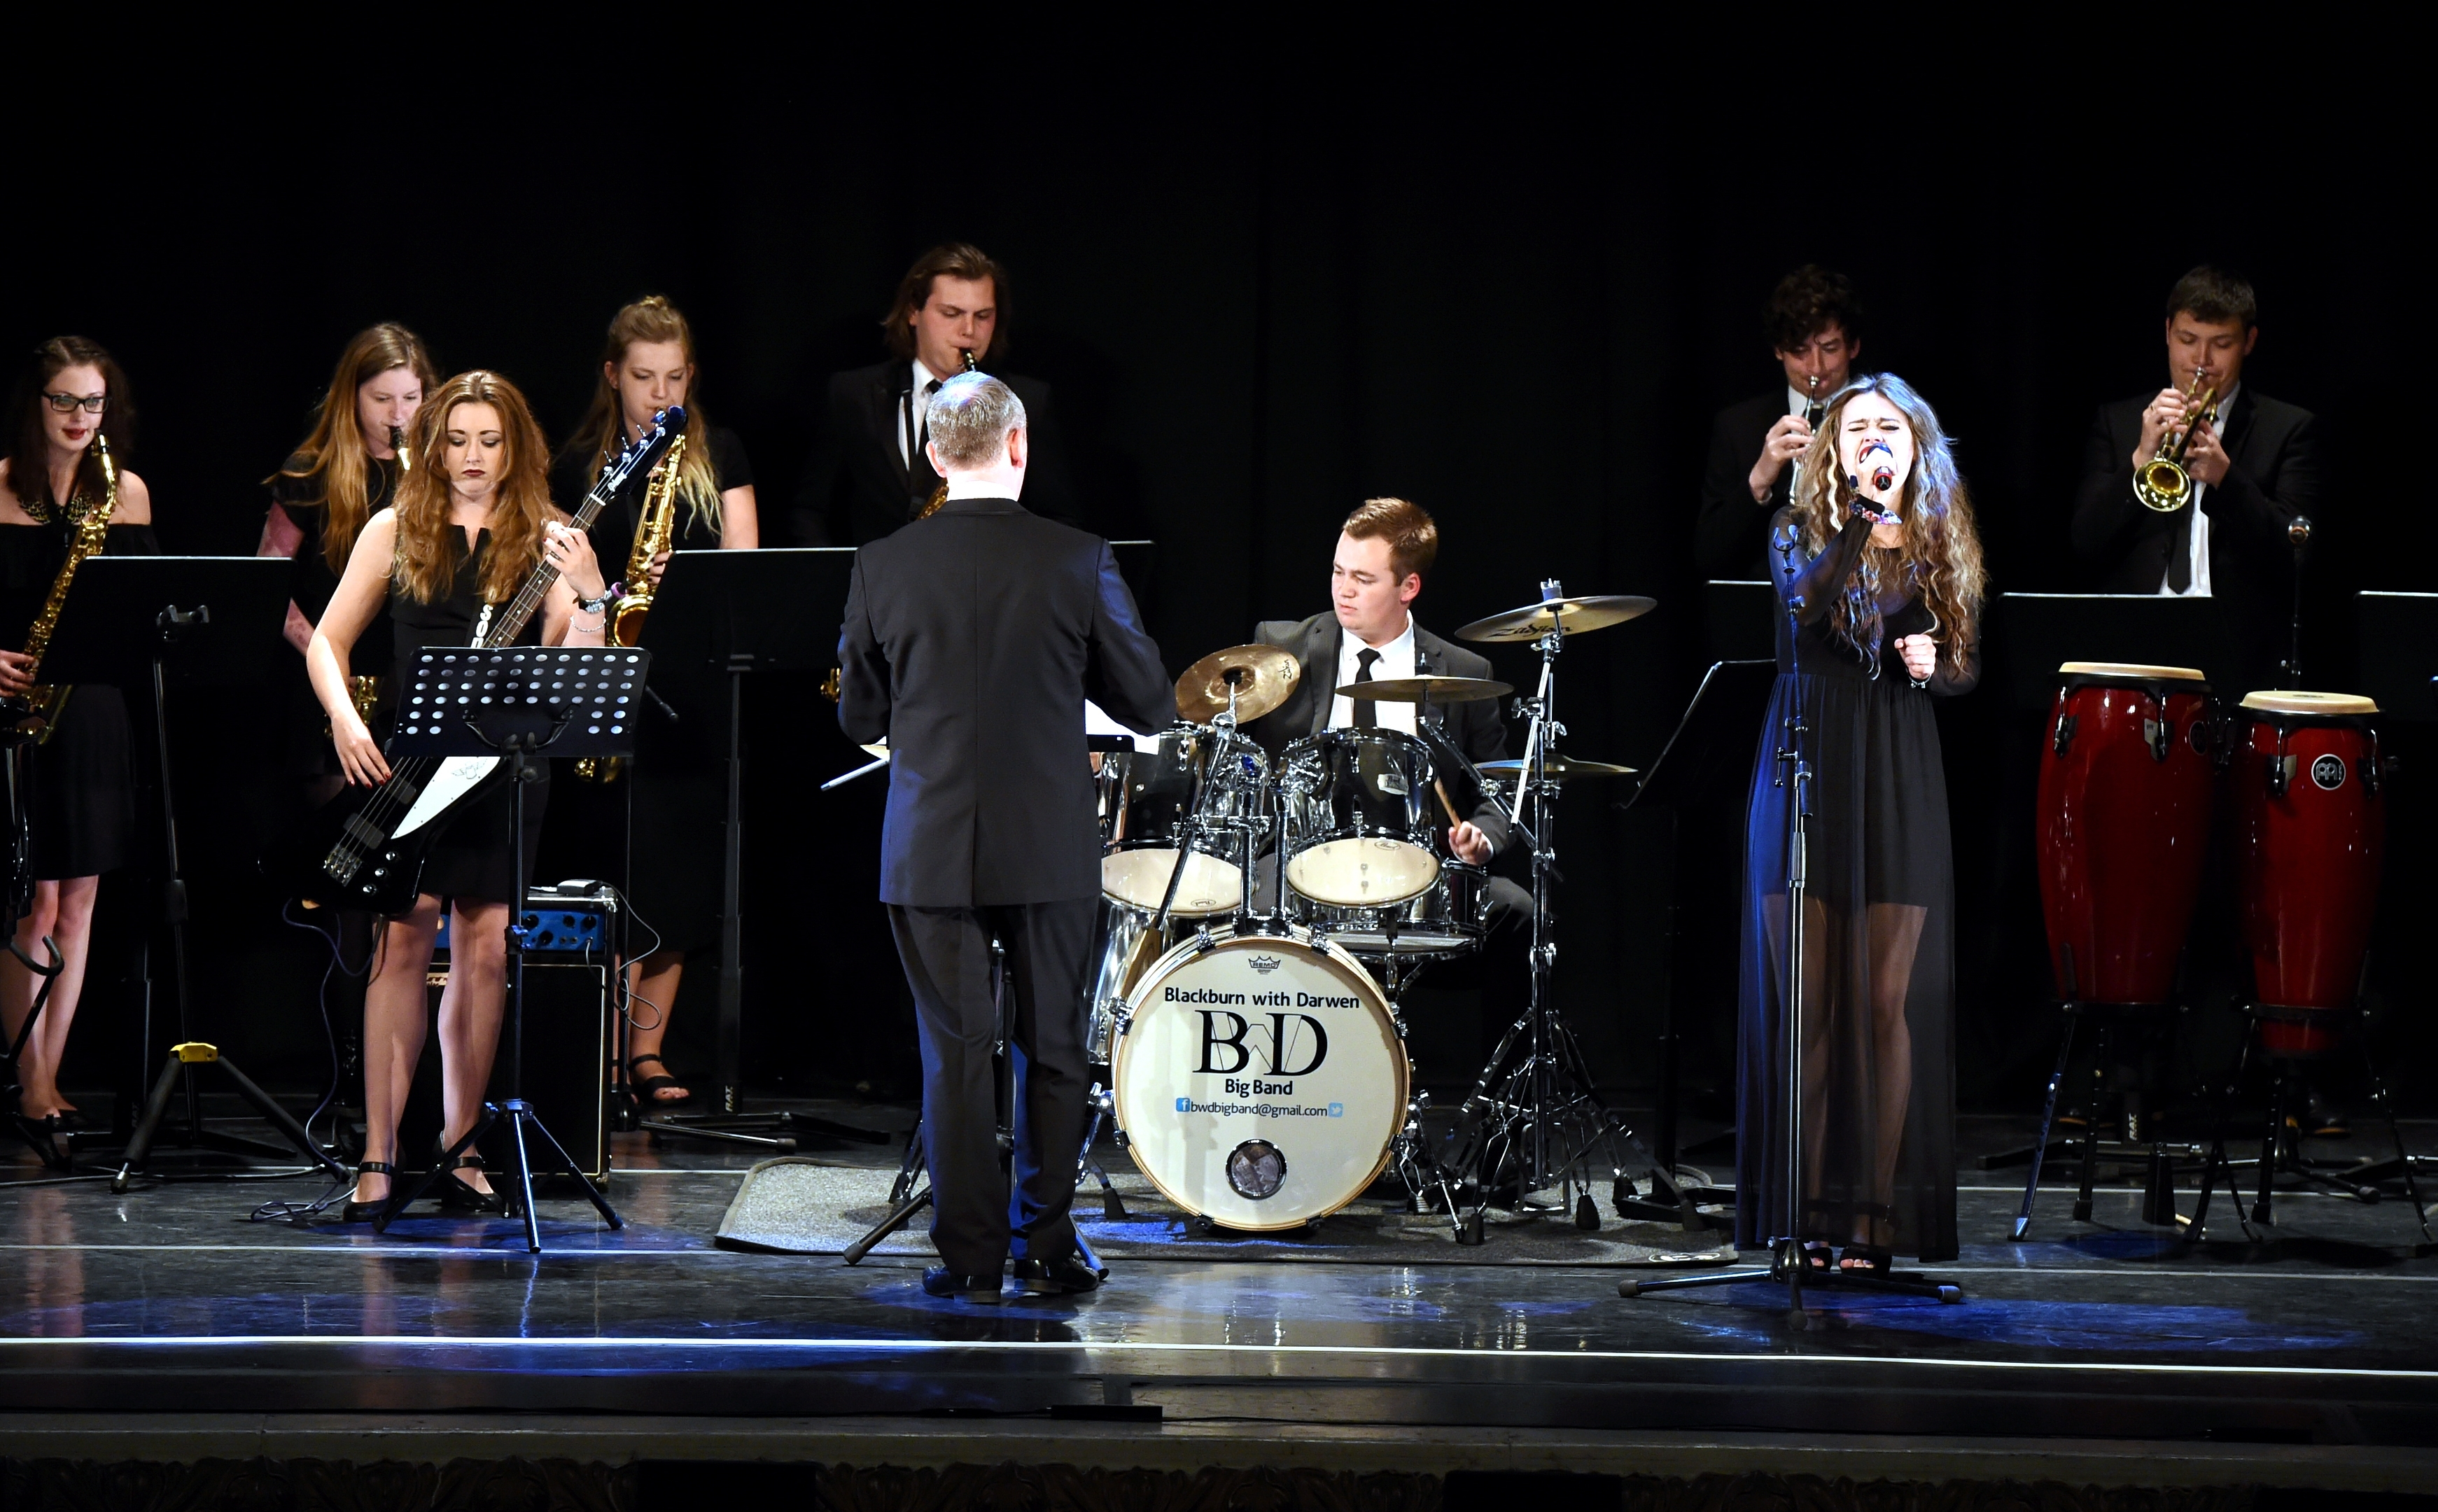 Blackburn with Darwen Big Band performing at AIYF International Variety Gala at HMT.  